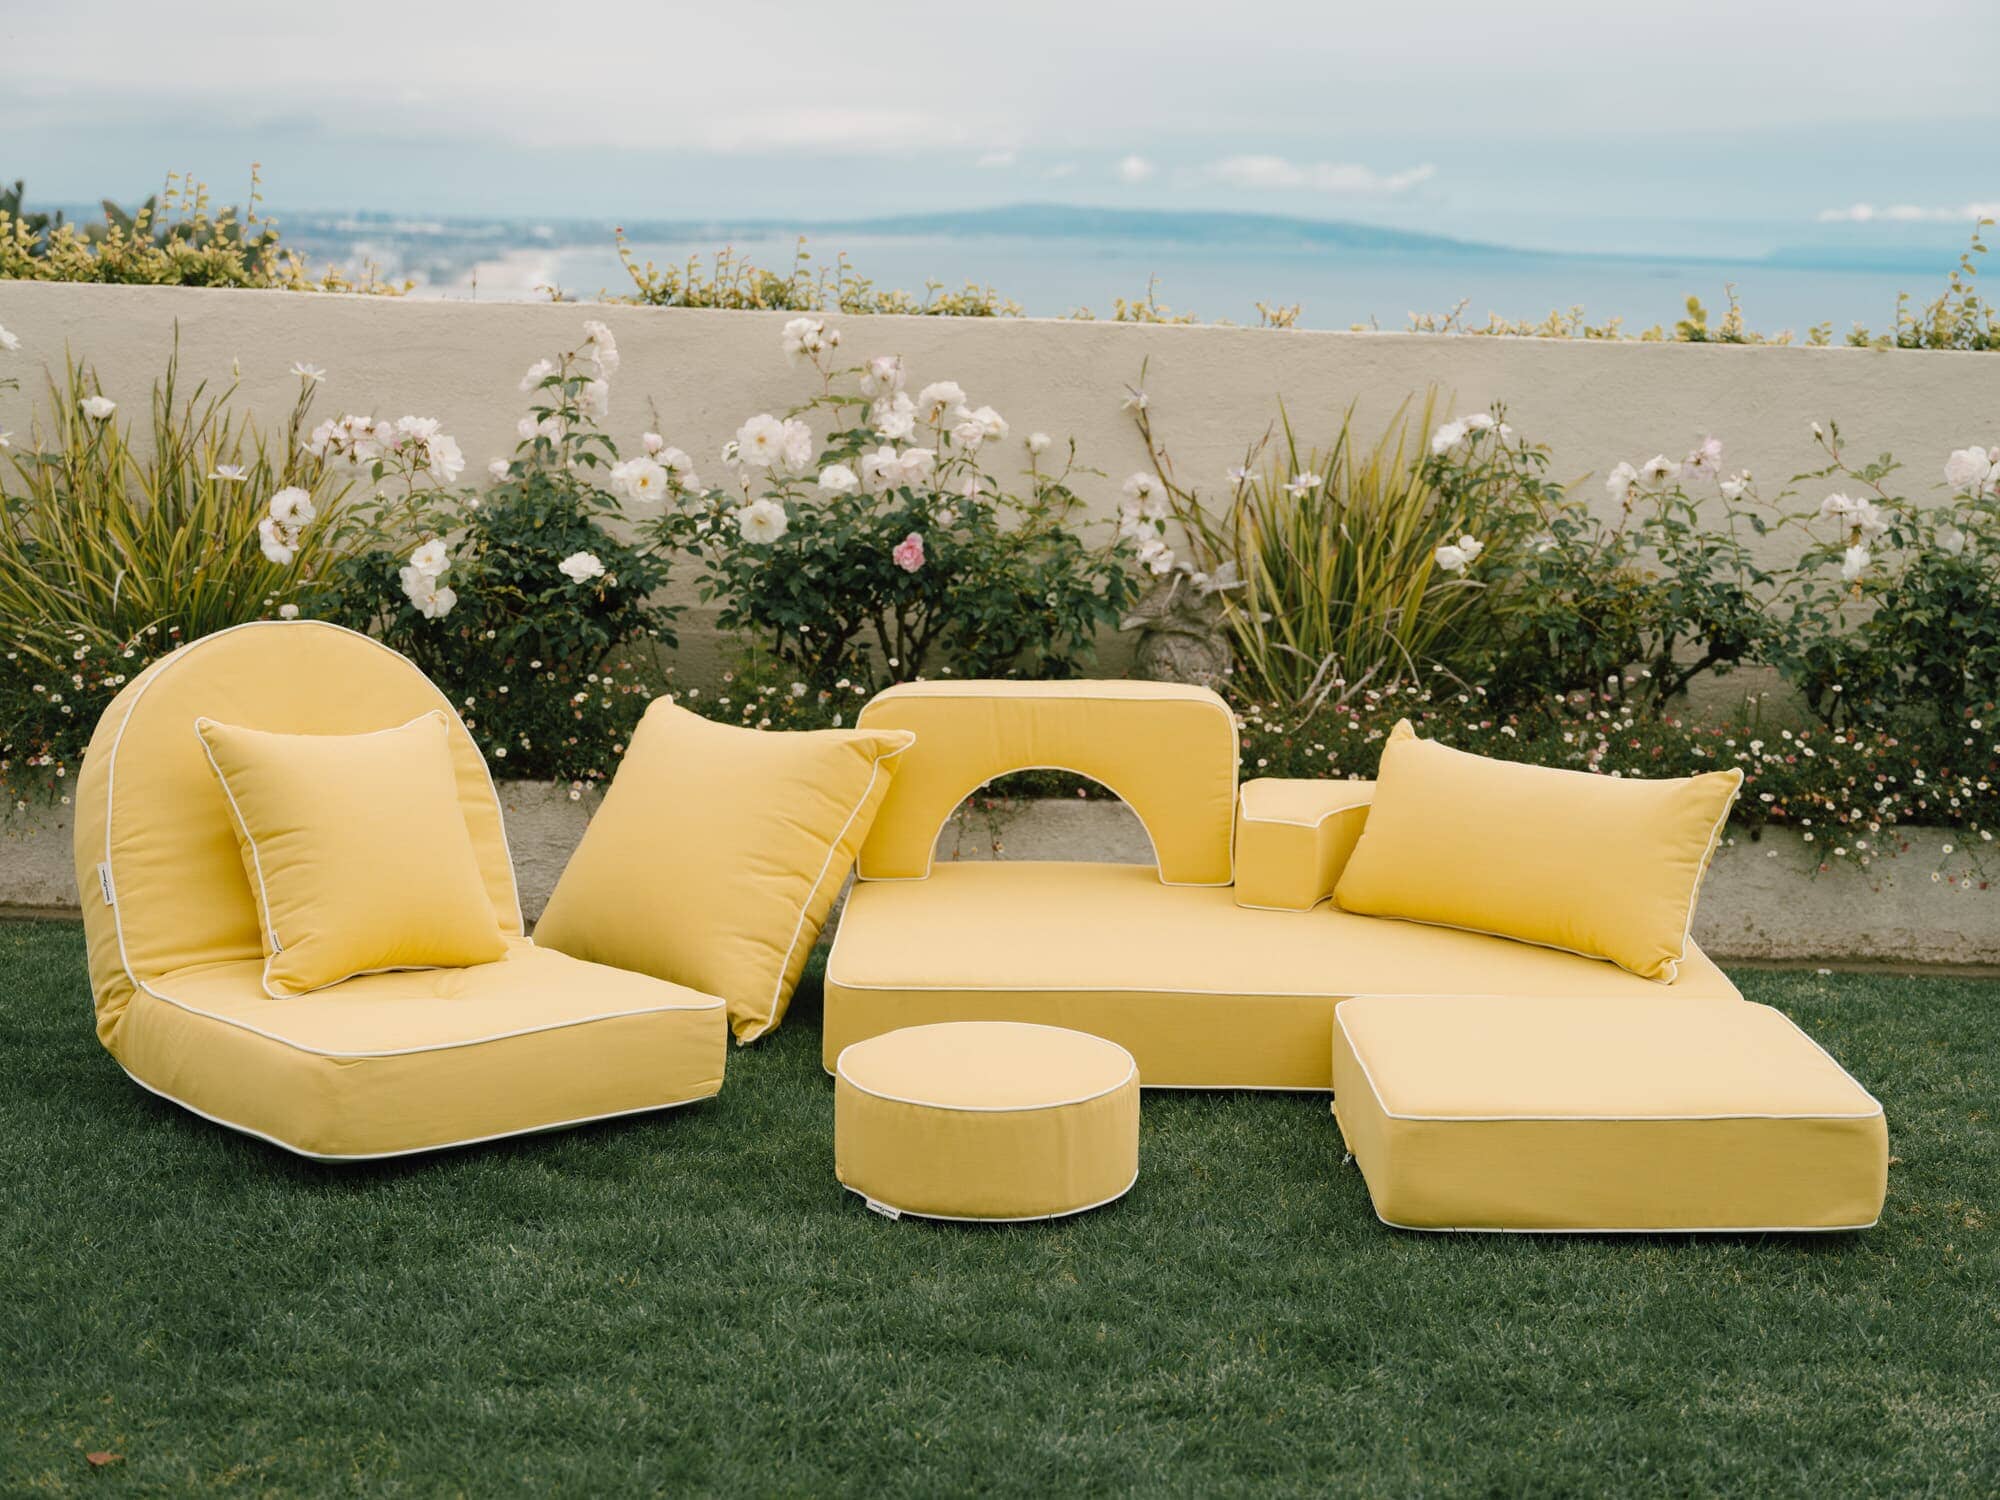 Riviera mimosa modular pillow stack in a garden setting